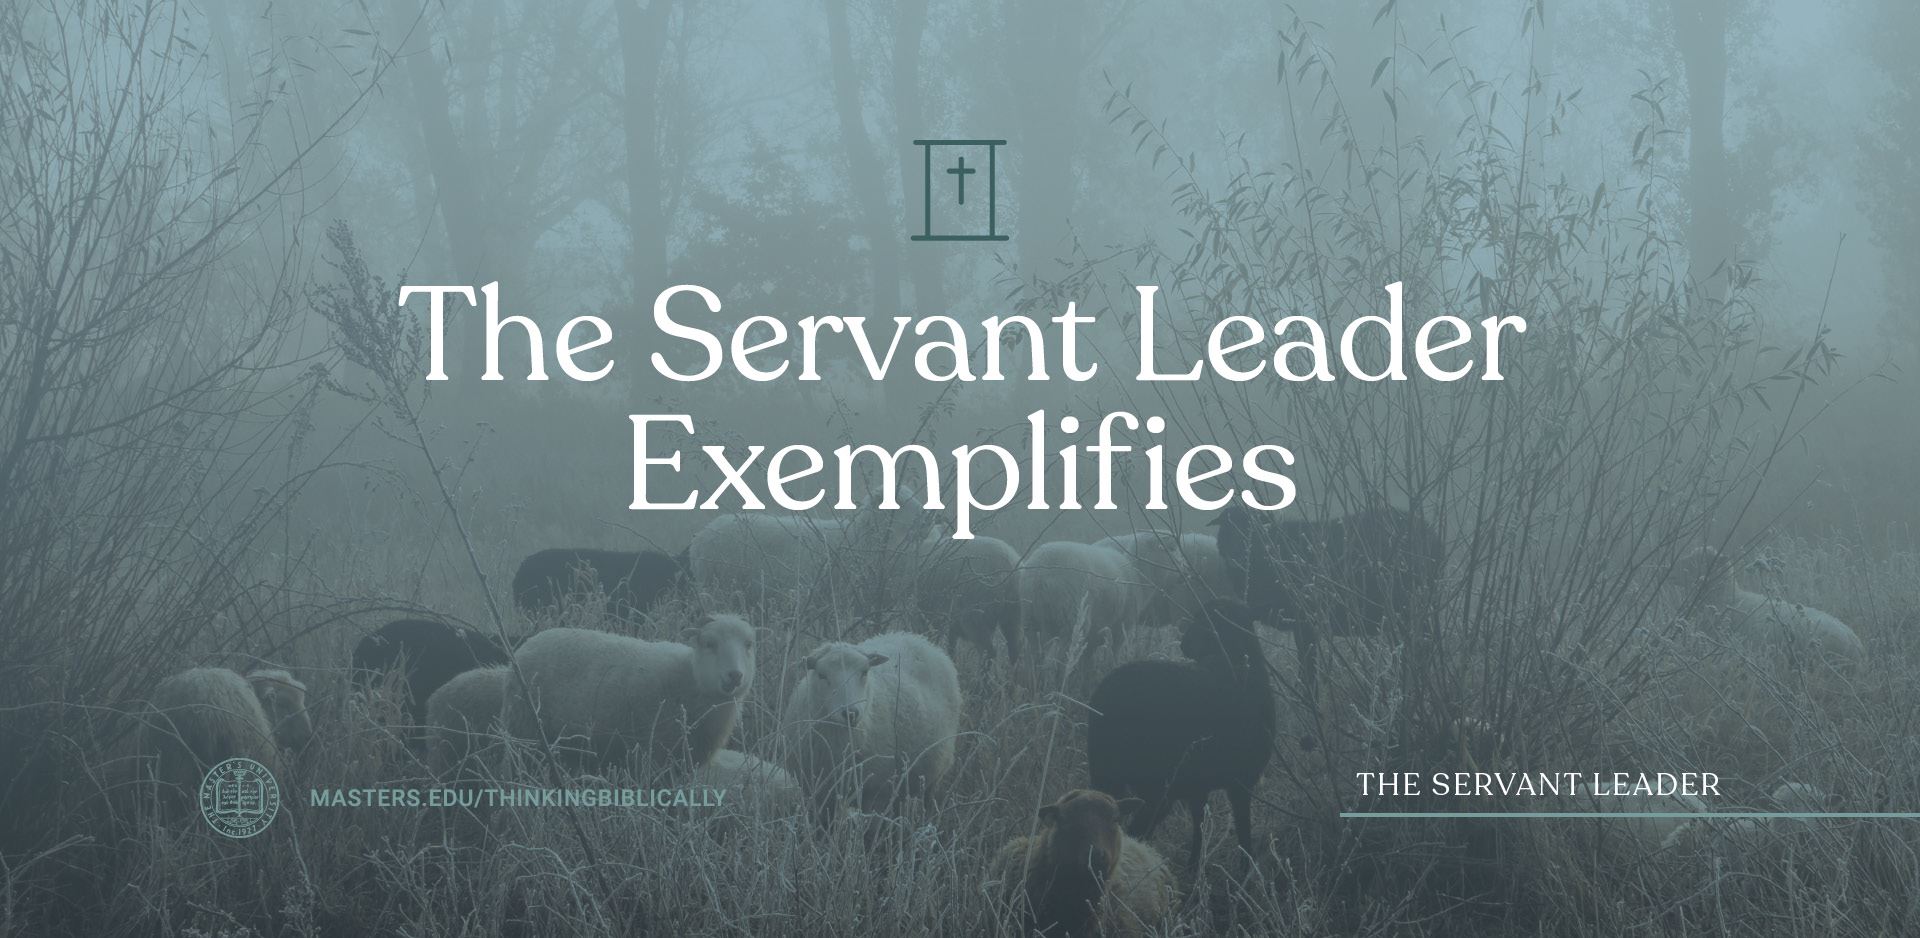 The Servant Leader Exemplifies